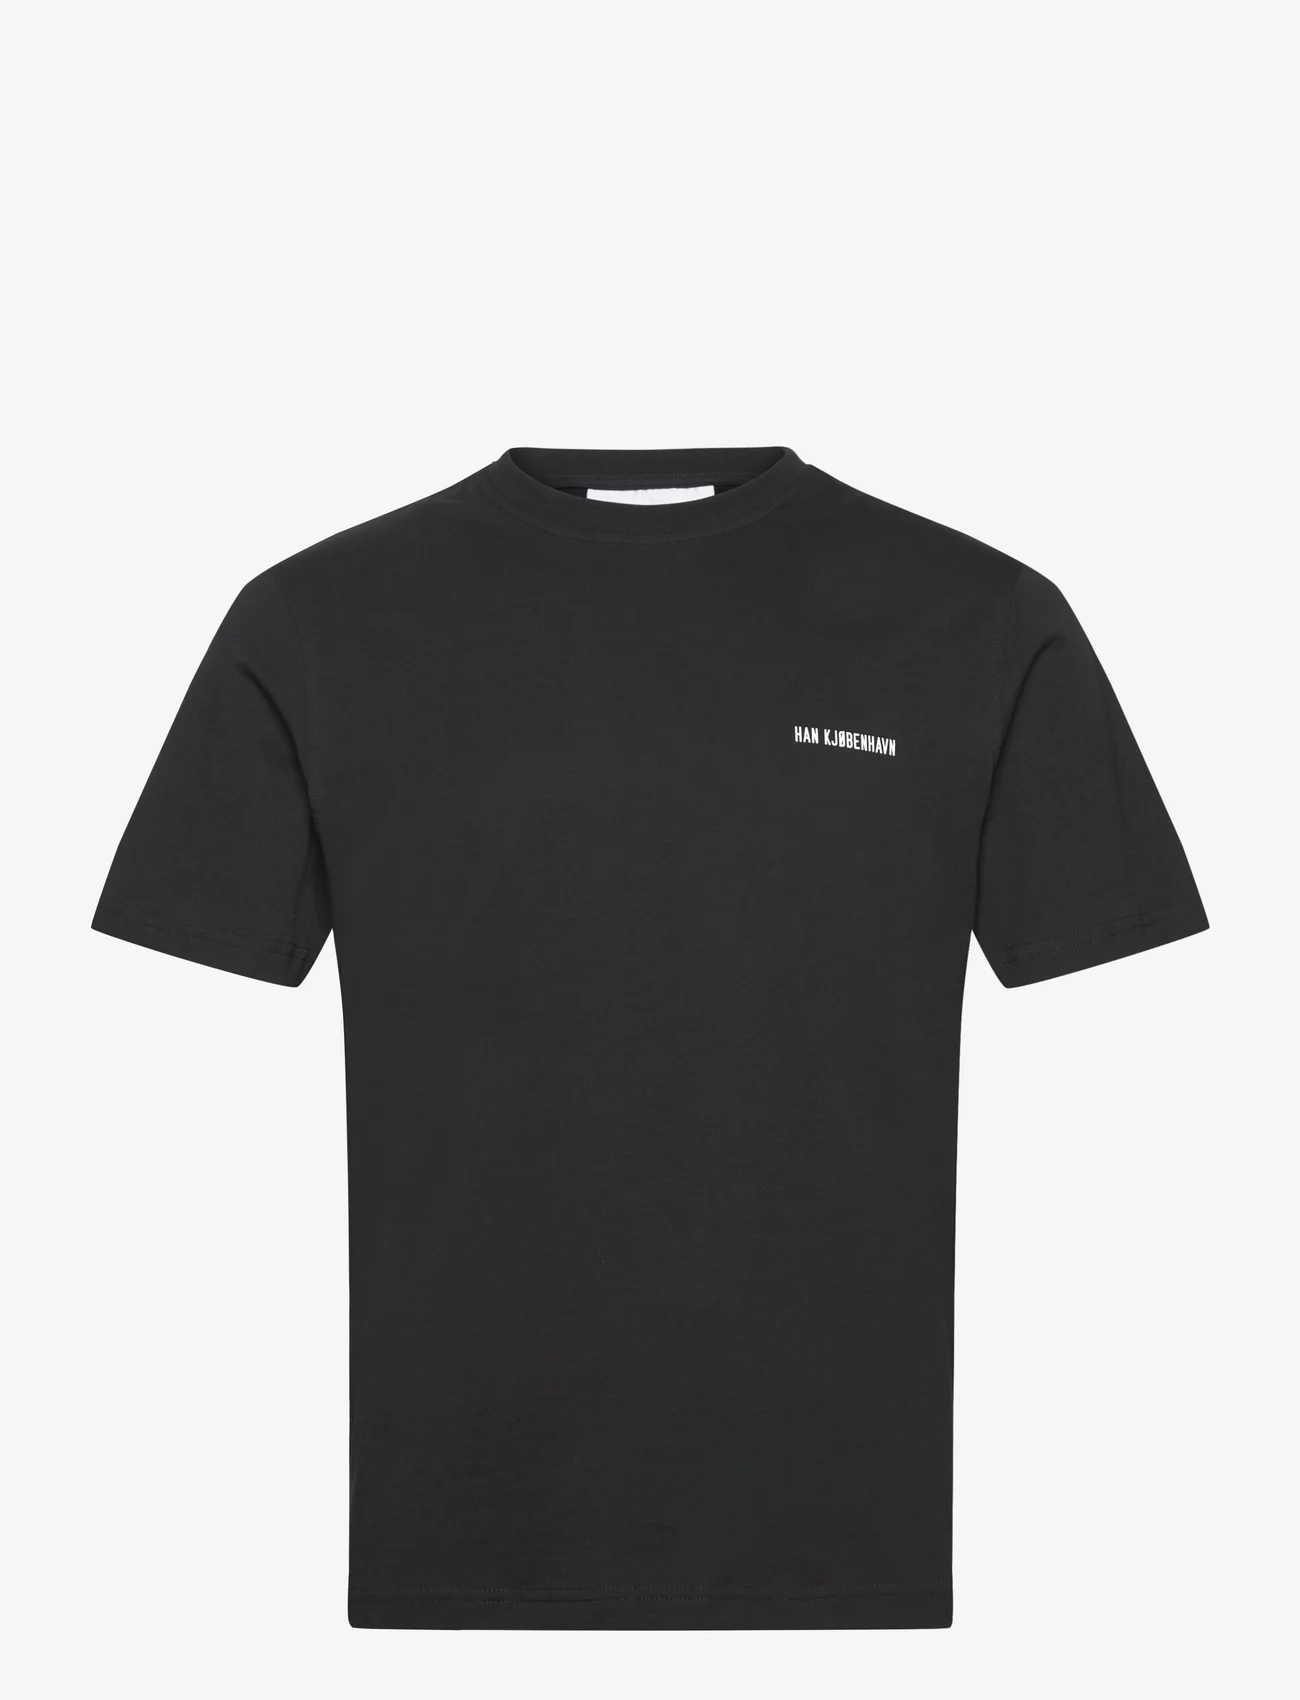 HAN Kjøbenhavn - Regular T-shirt Short sleeve - black - 0